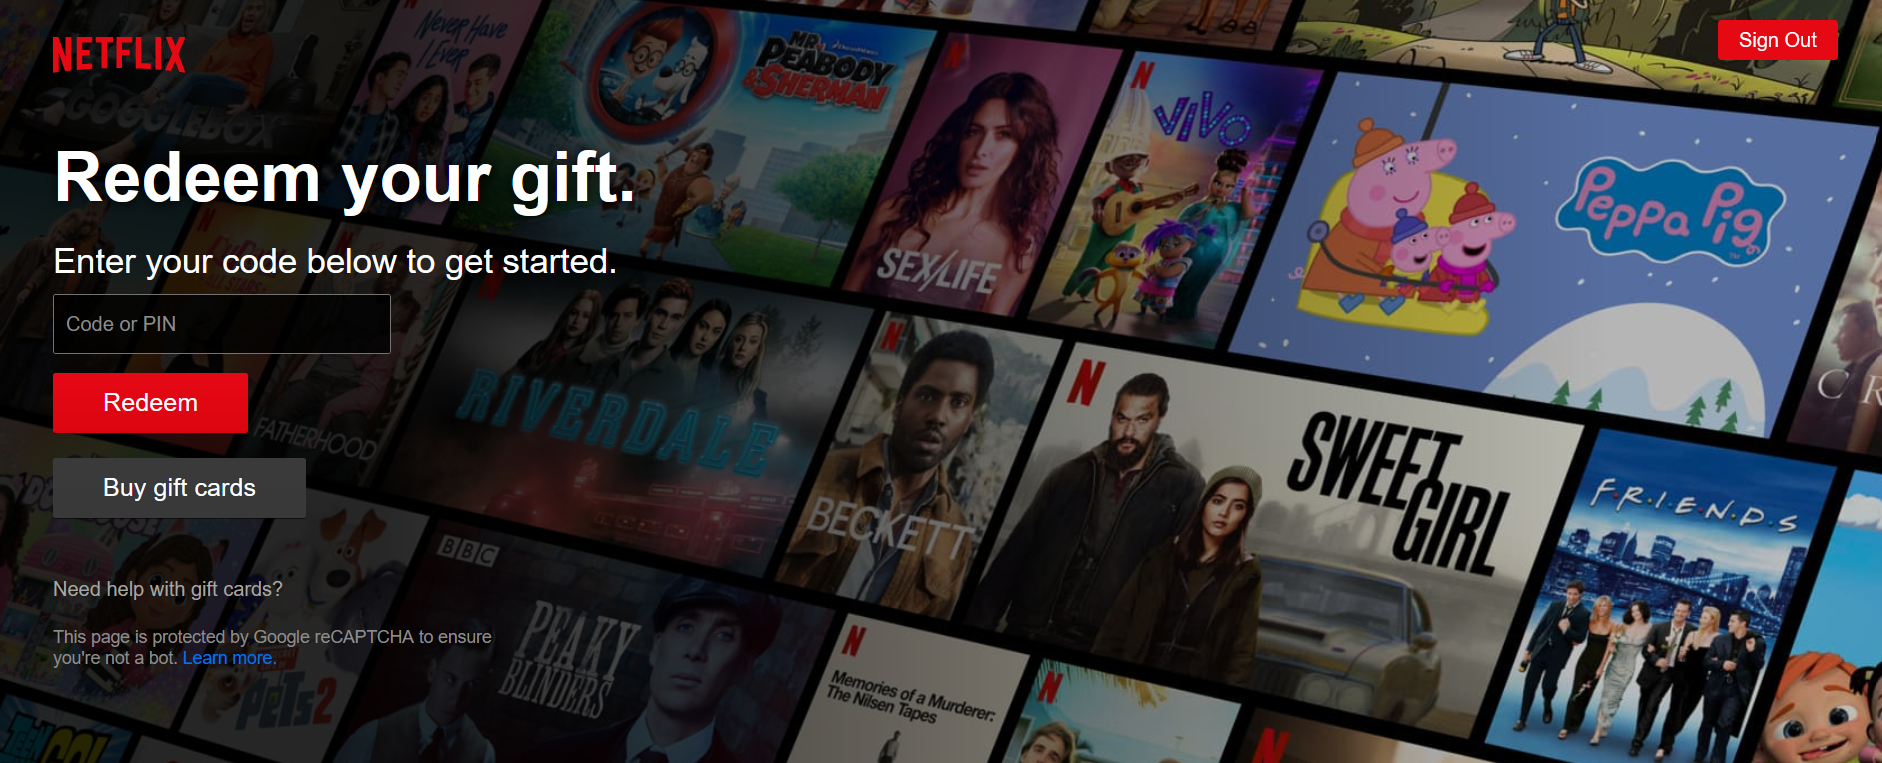 Netflix Redeem Gift Card or Promo Code